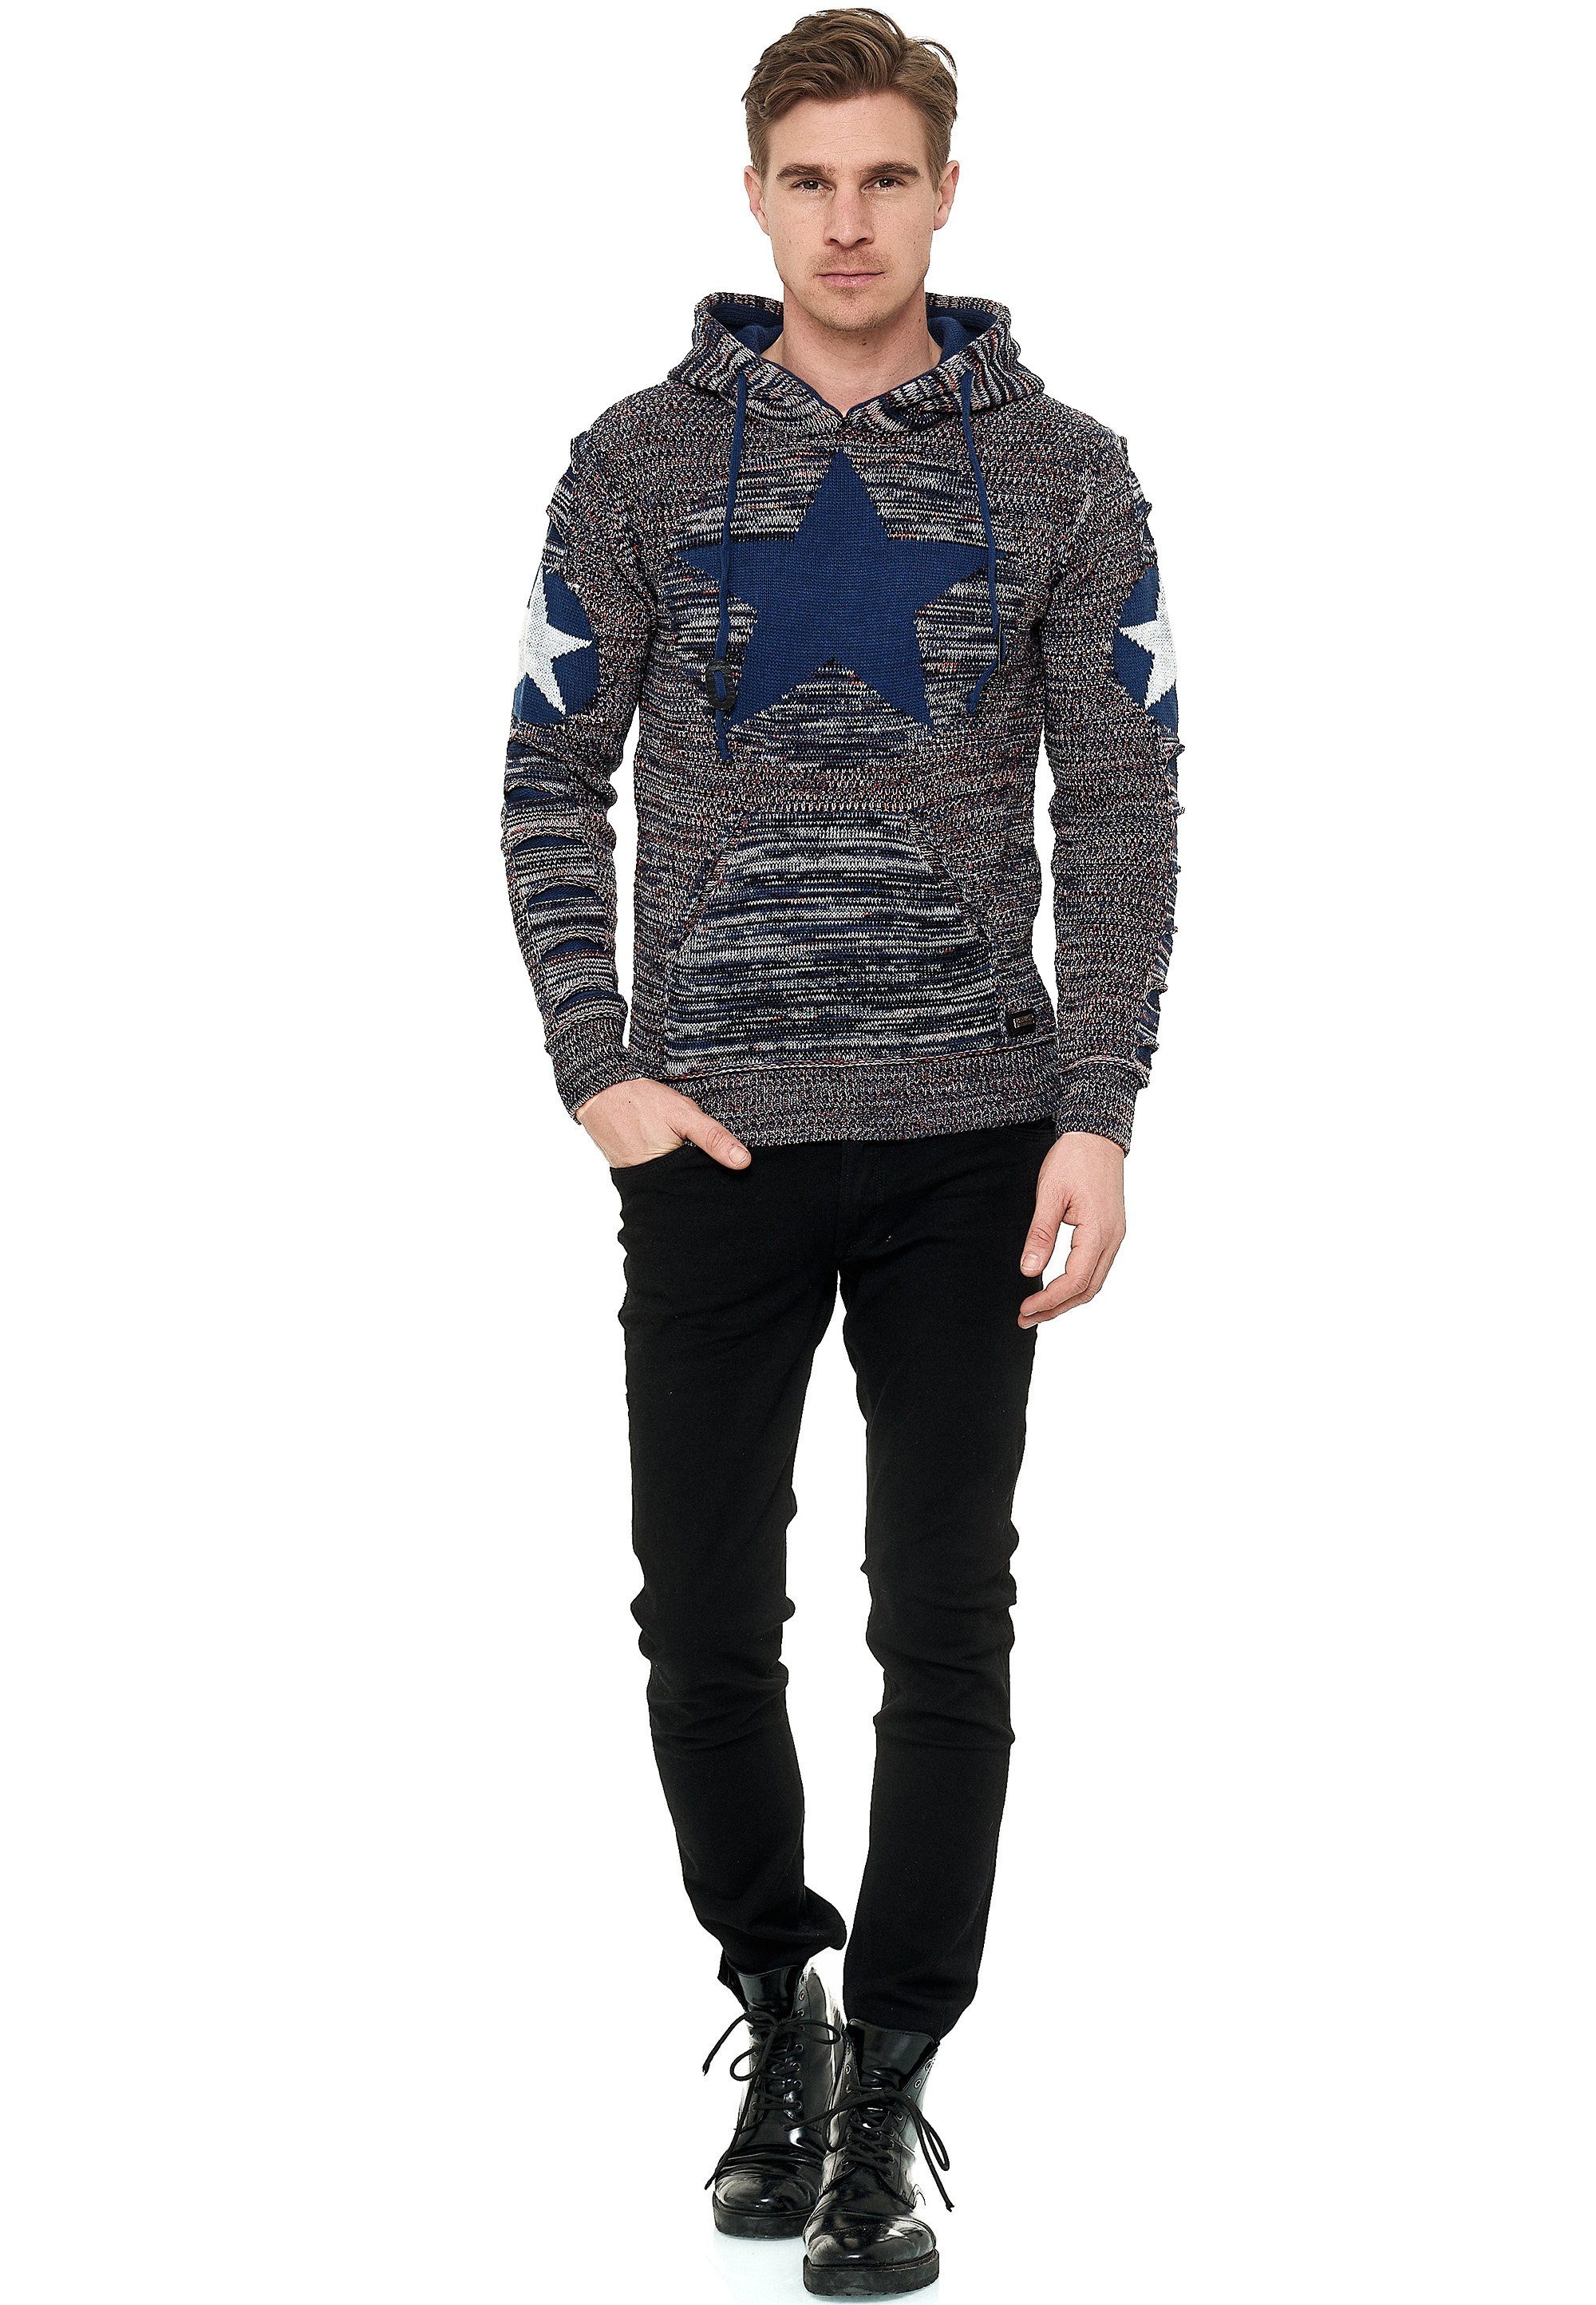 Rusty Neal Kapuzensweatshirt mit großem Stern-Design blau-grau